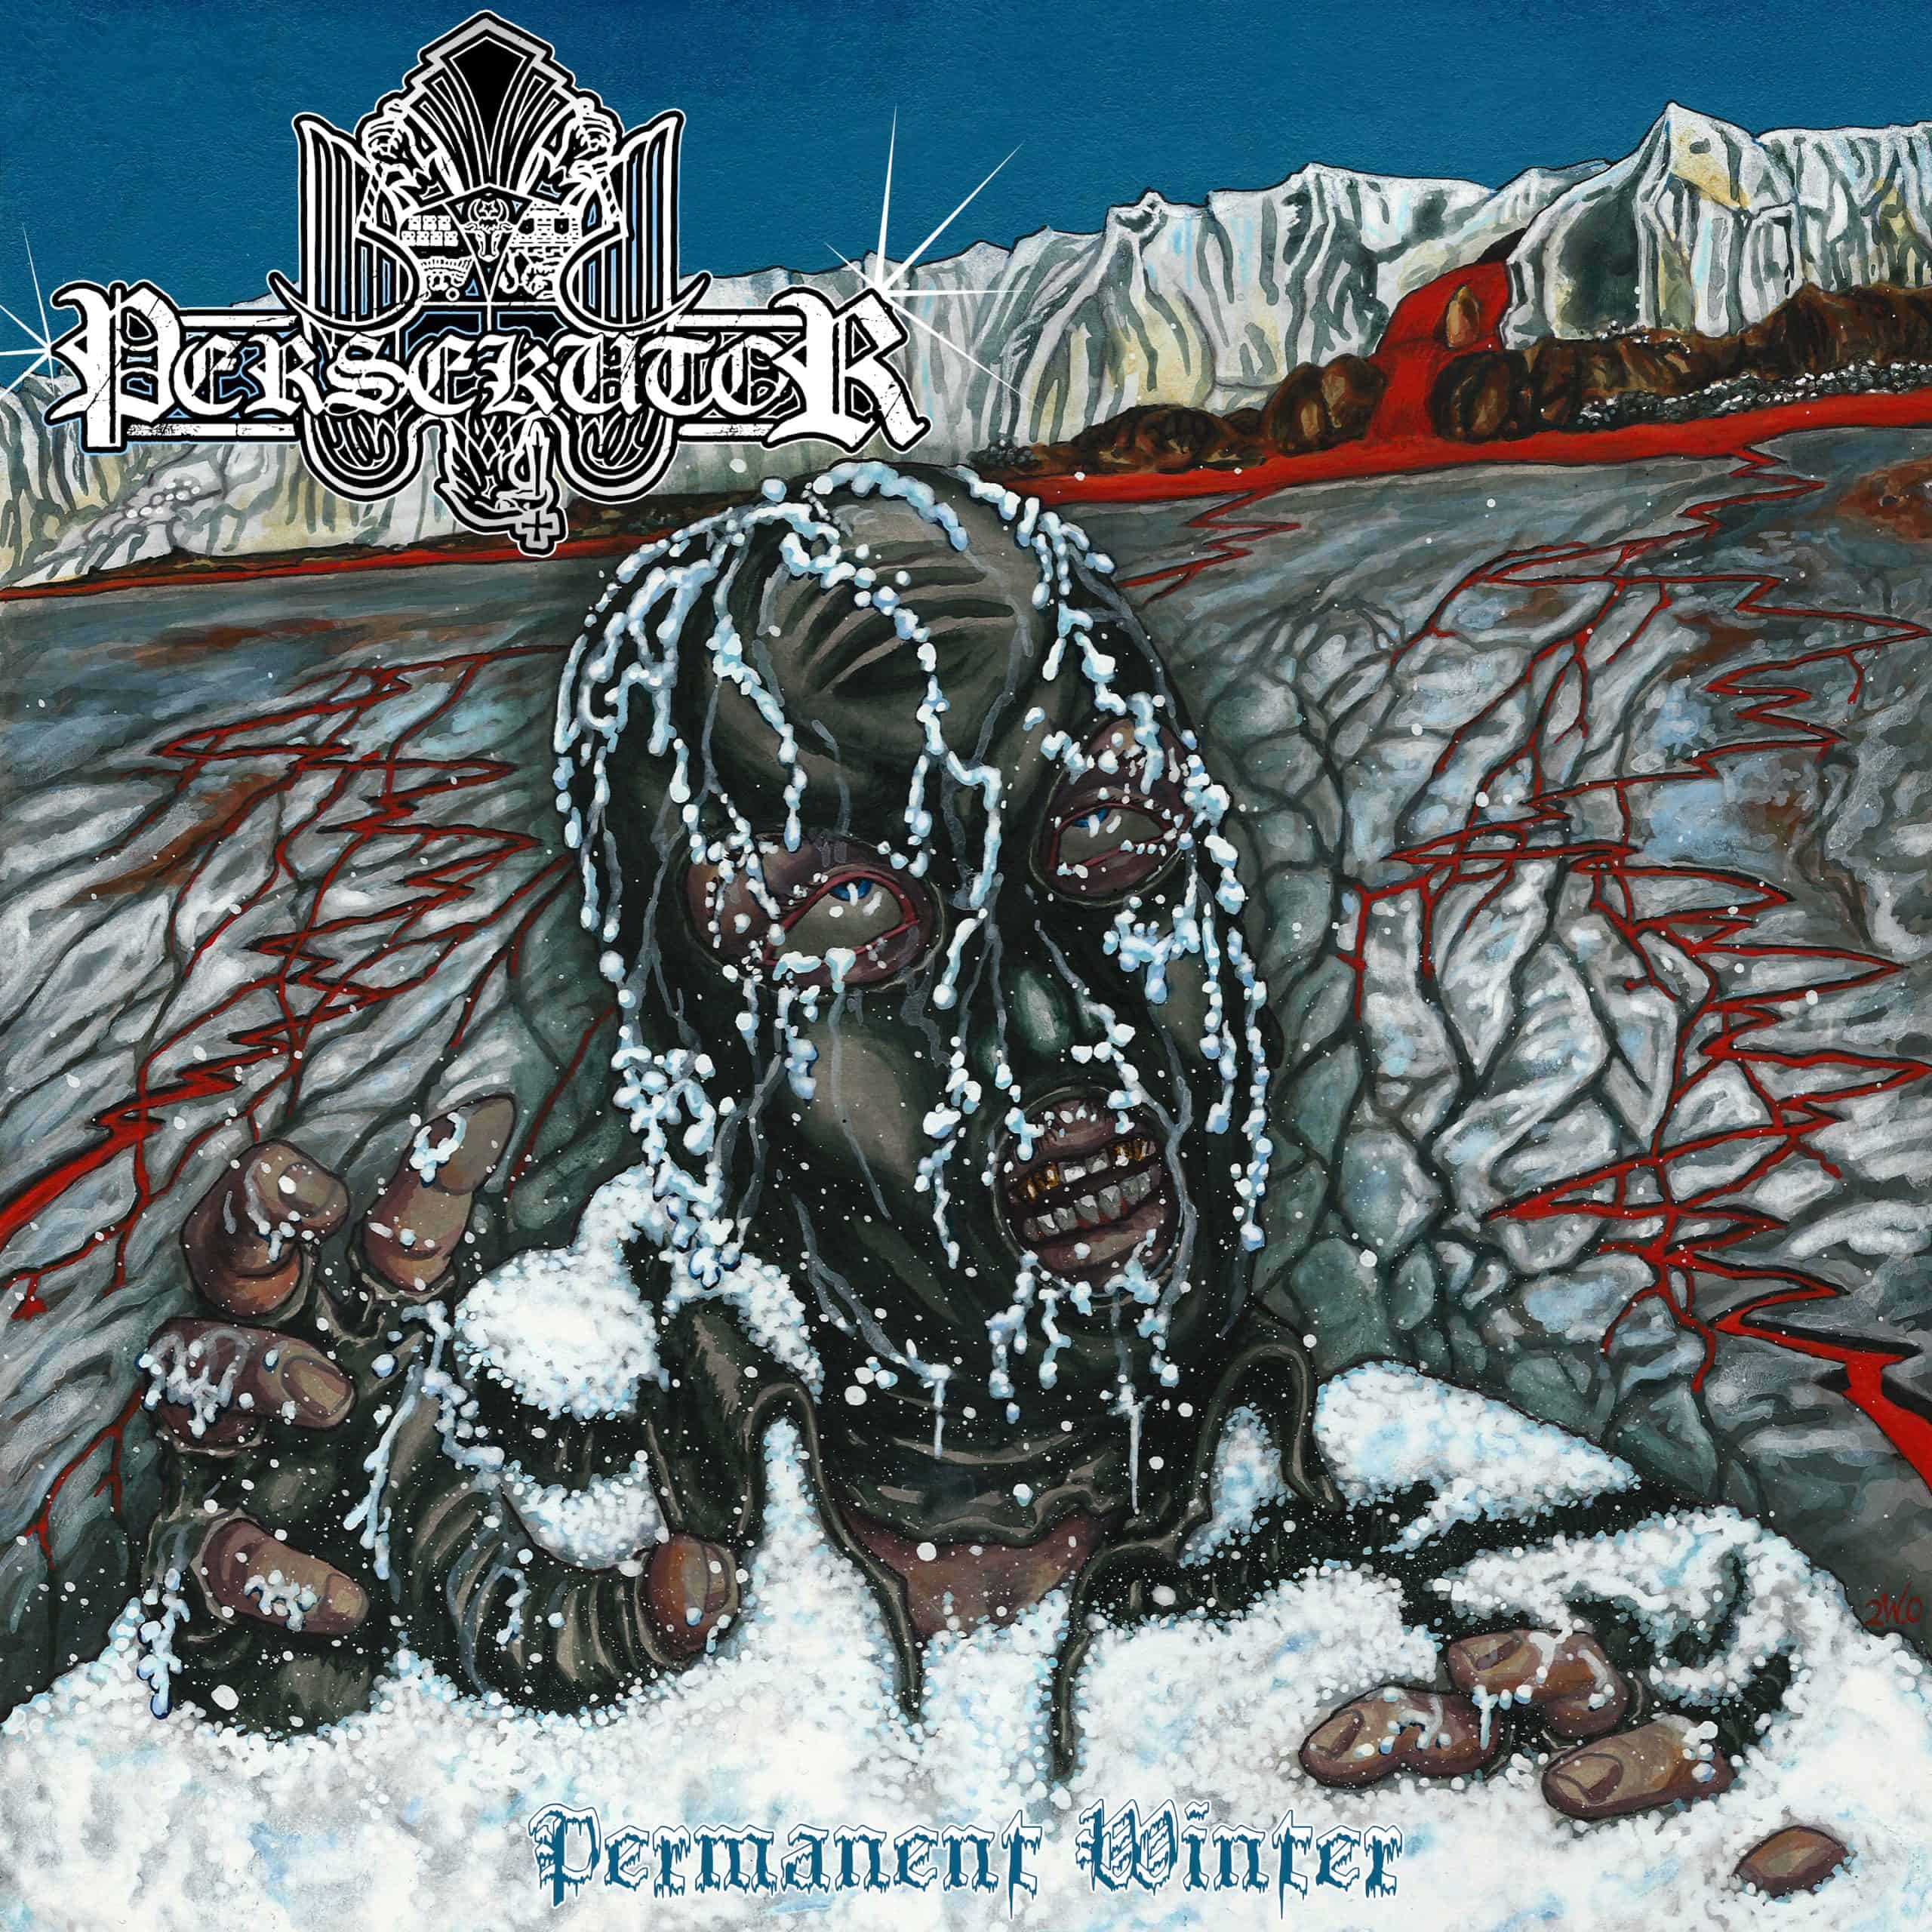 persekutor_permanent_winter_cover-scaled